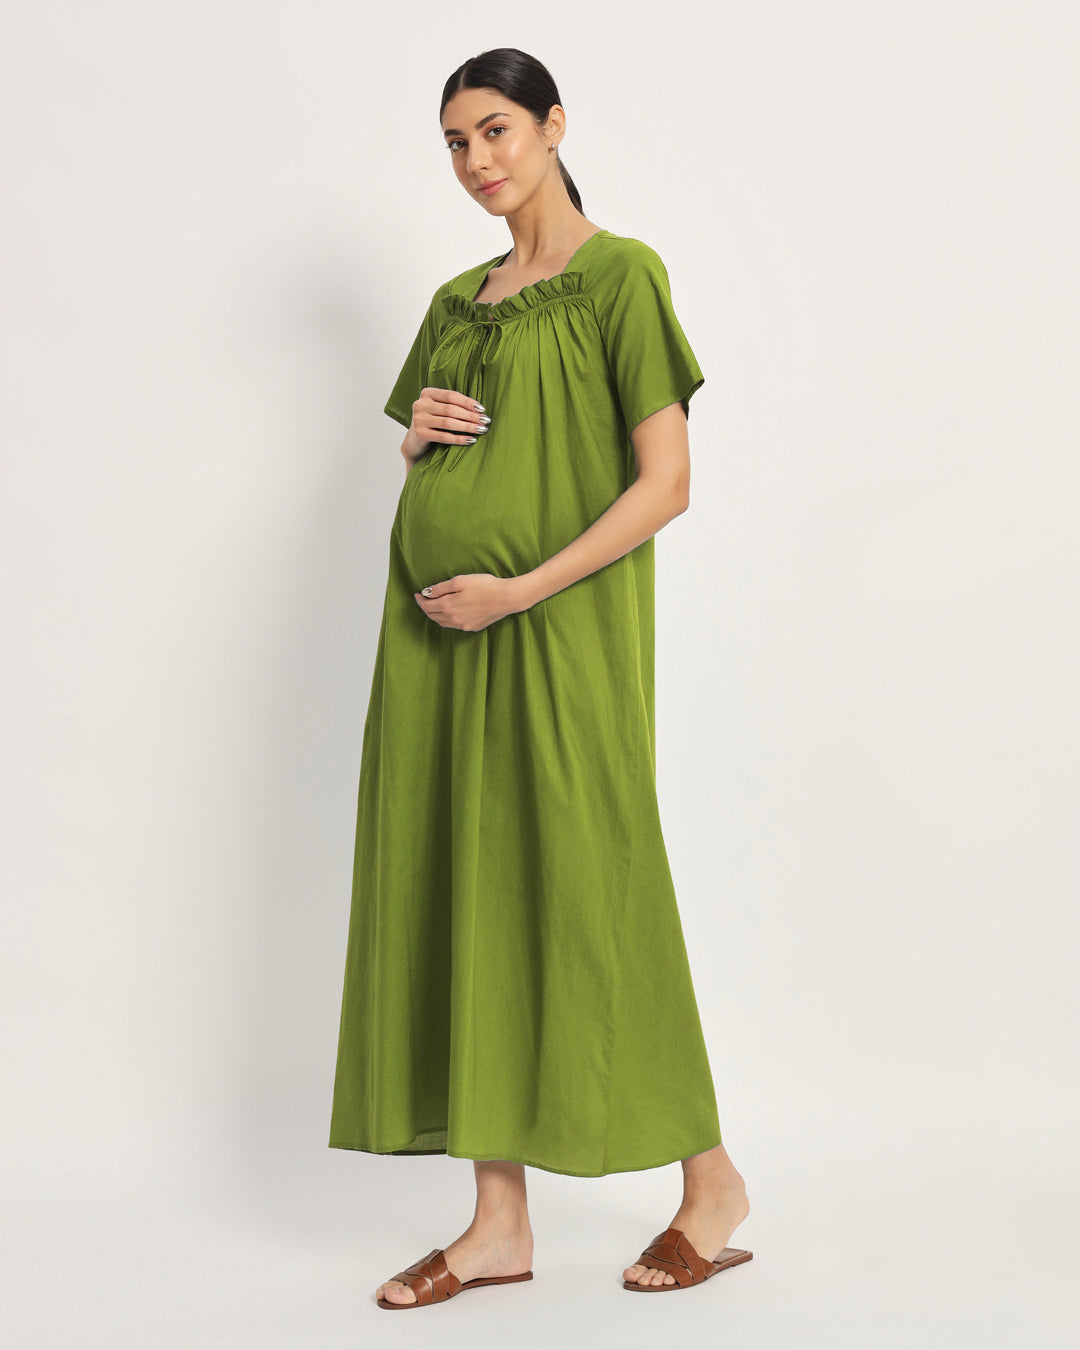 Combo: Iced Grey & Sage Green Nurture N' Shine Maternity & Nursing Dress